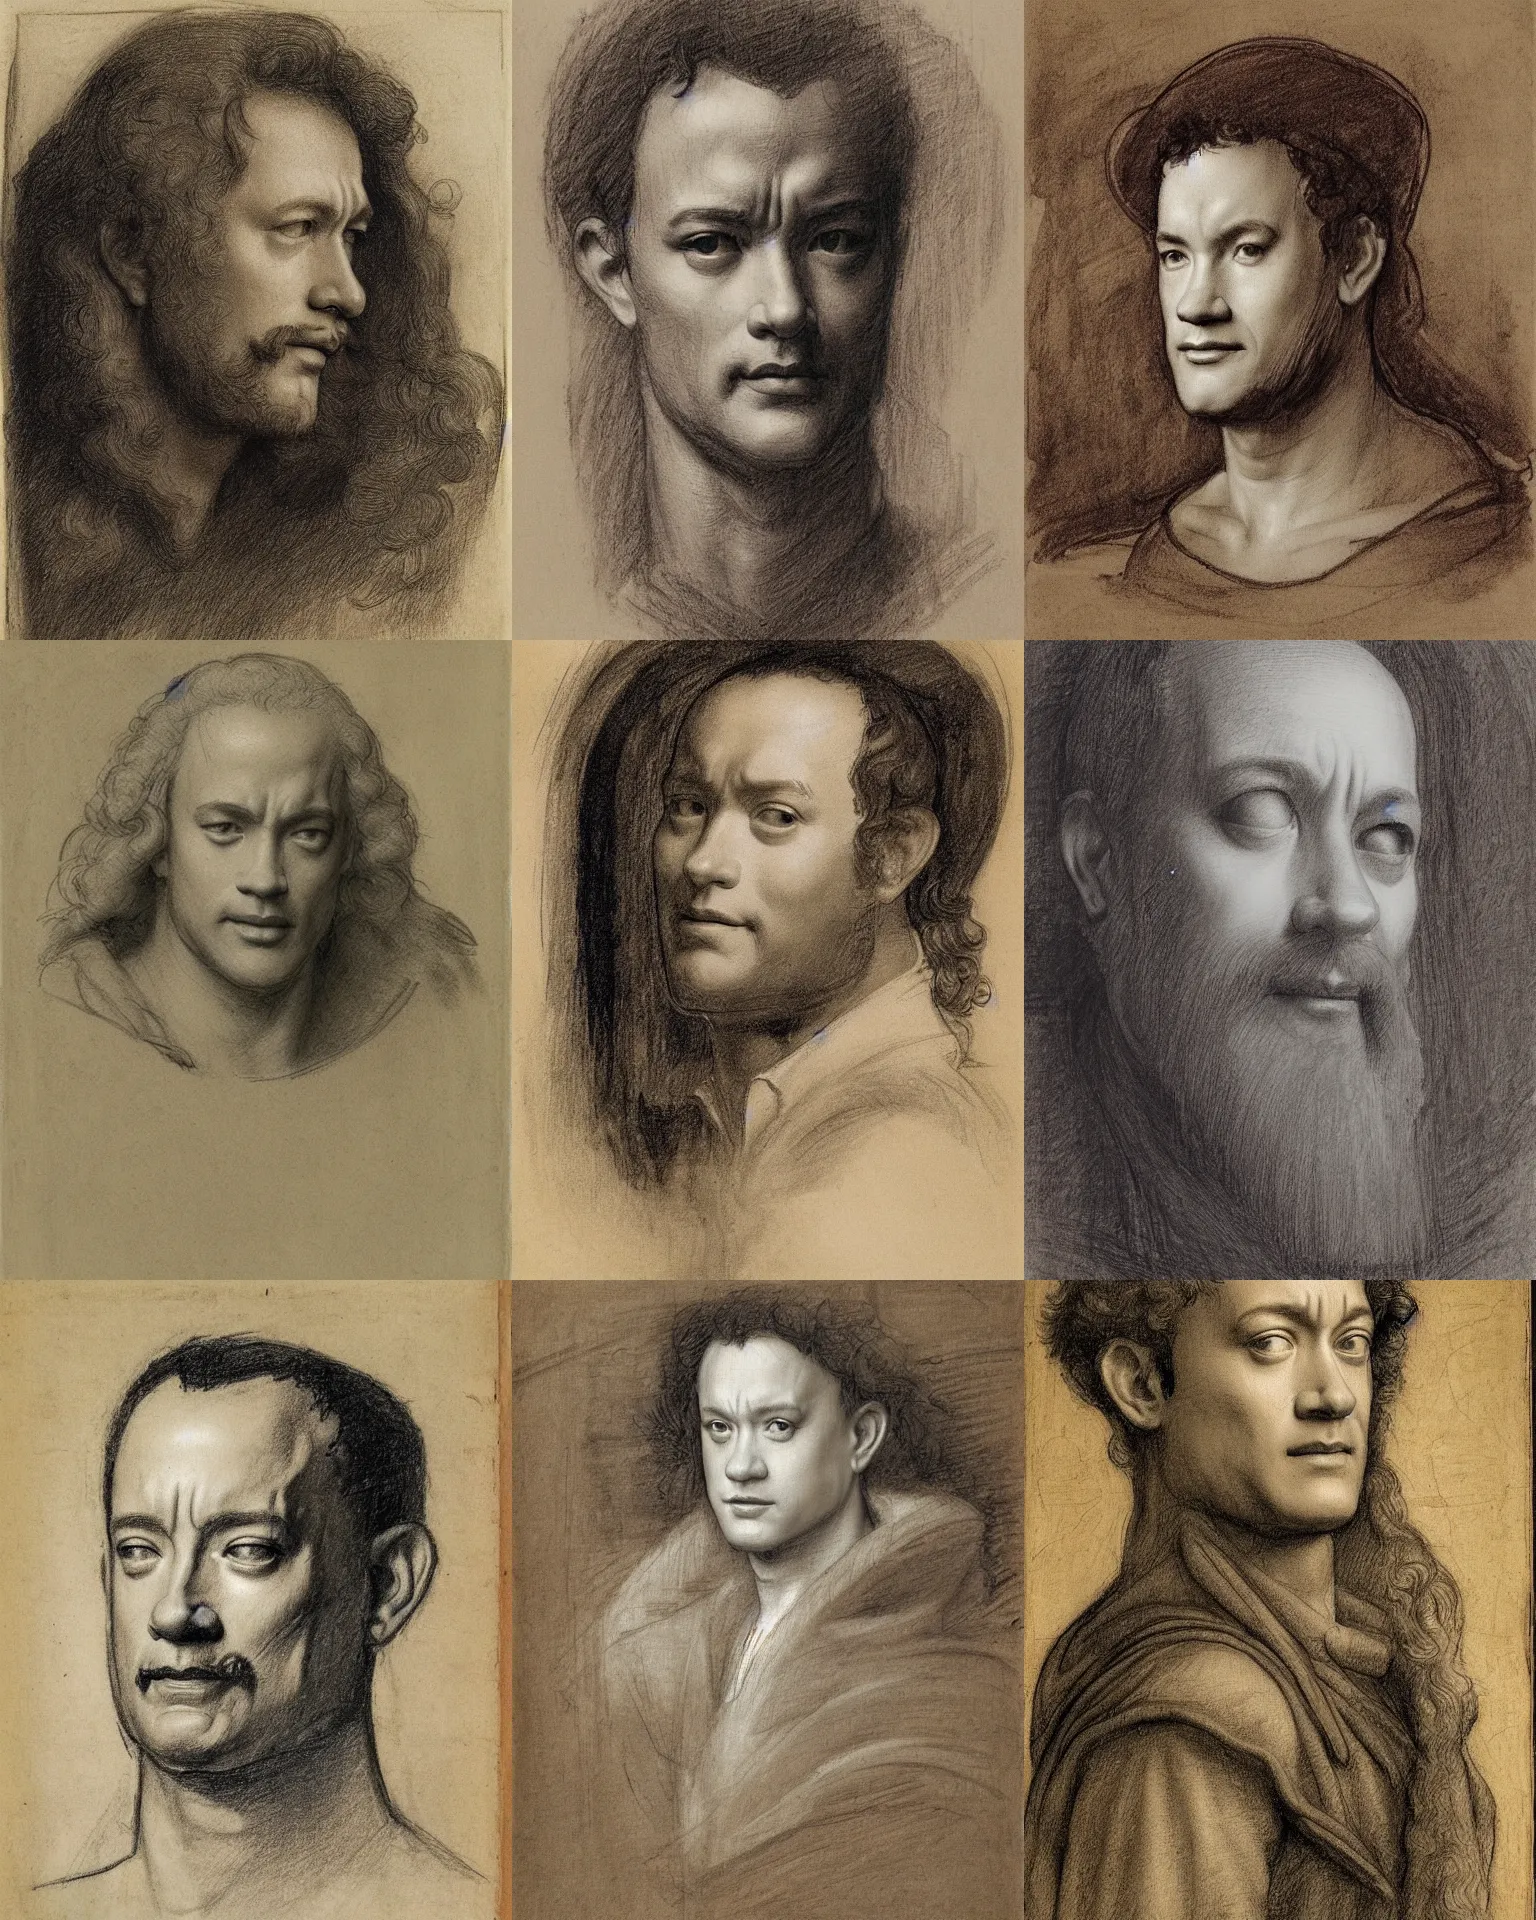 Prompt: portrait of tom hanks, preliminary drawing by michelangelo, leonardo da vinci, leyendecker, peter paul rebens, charles le brun